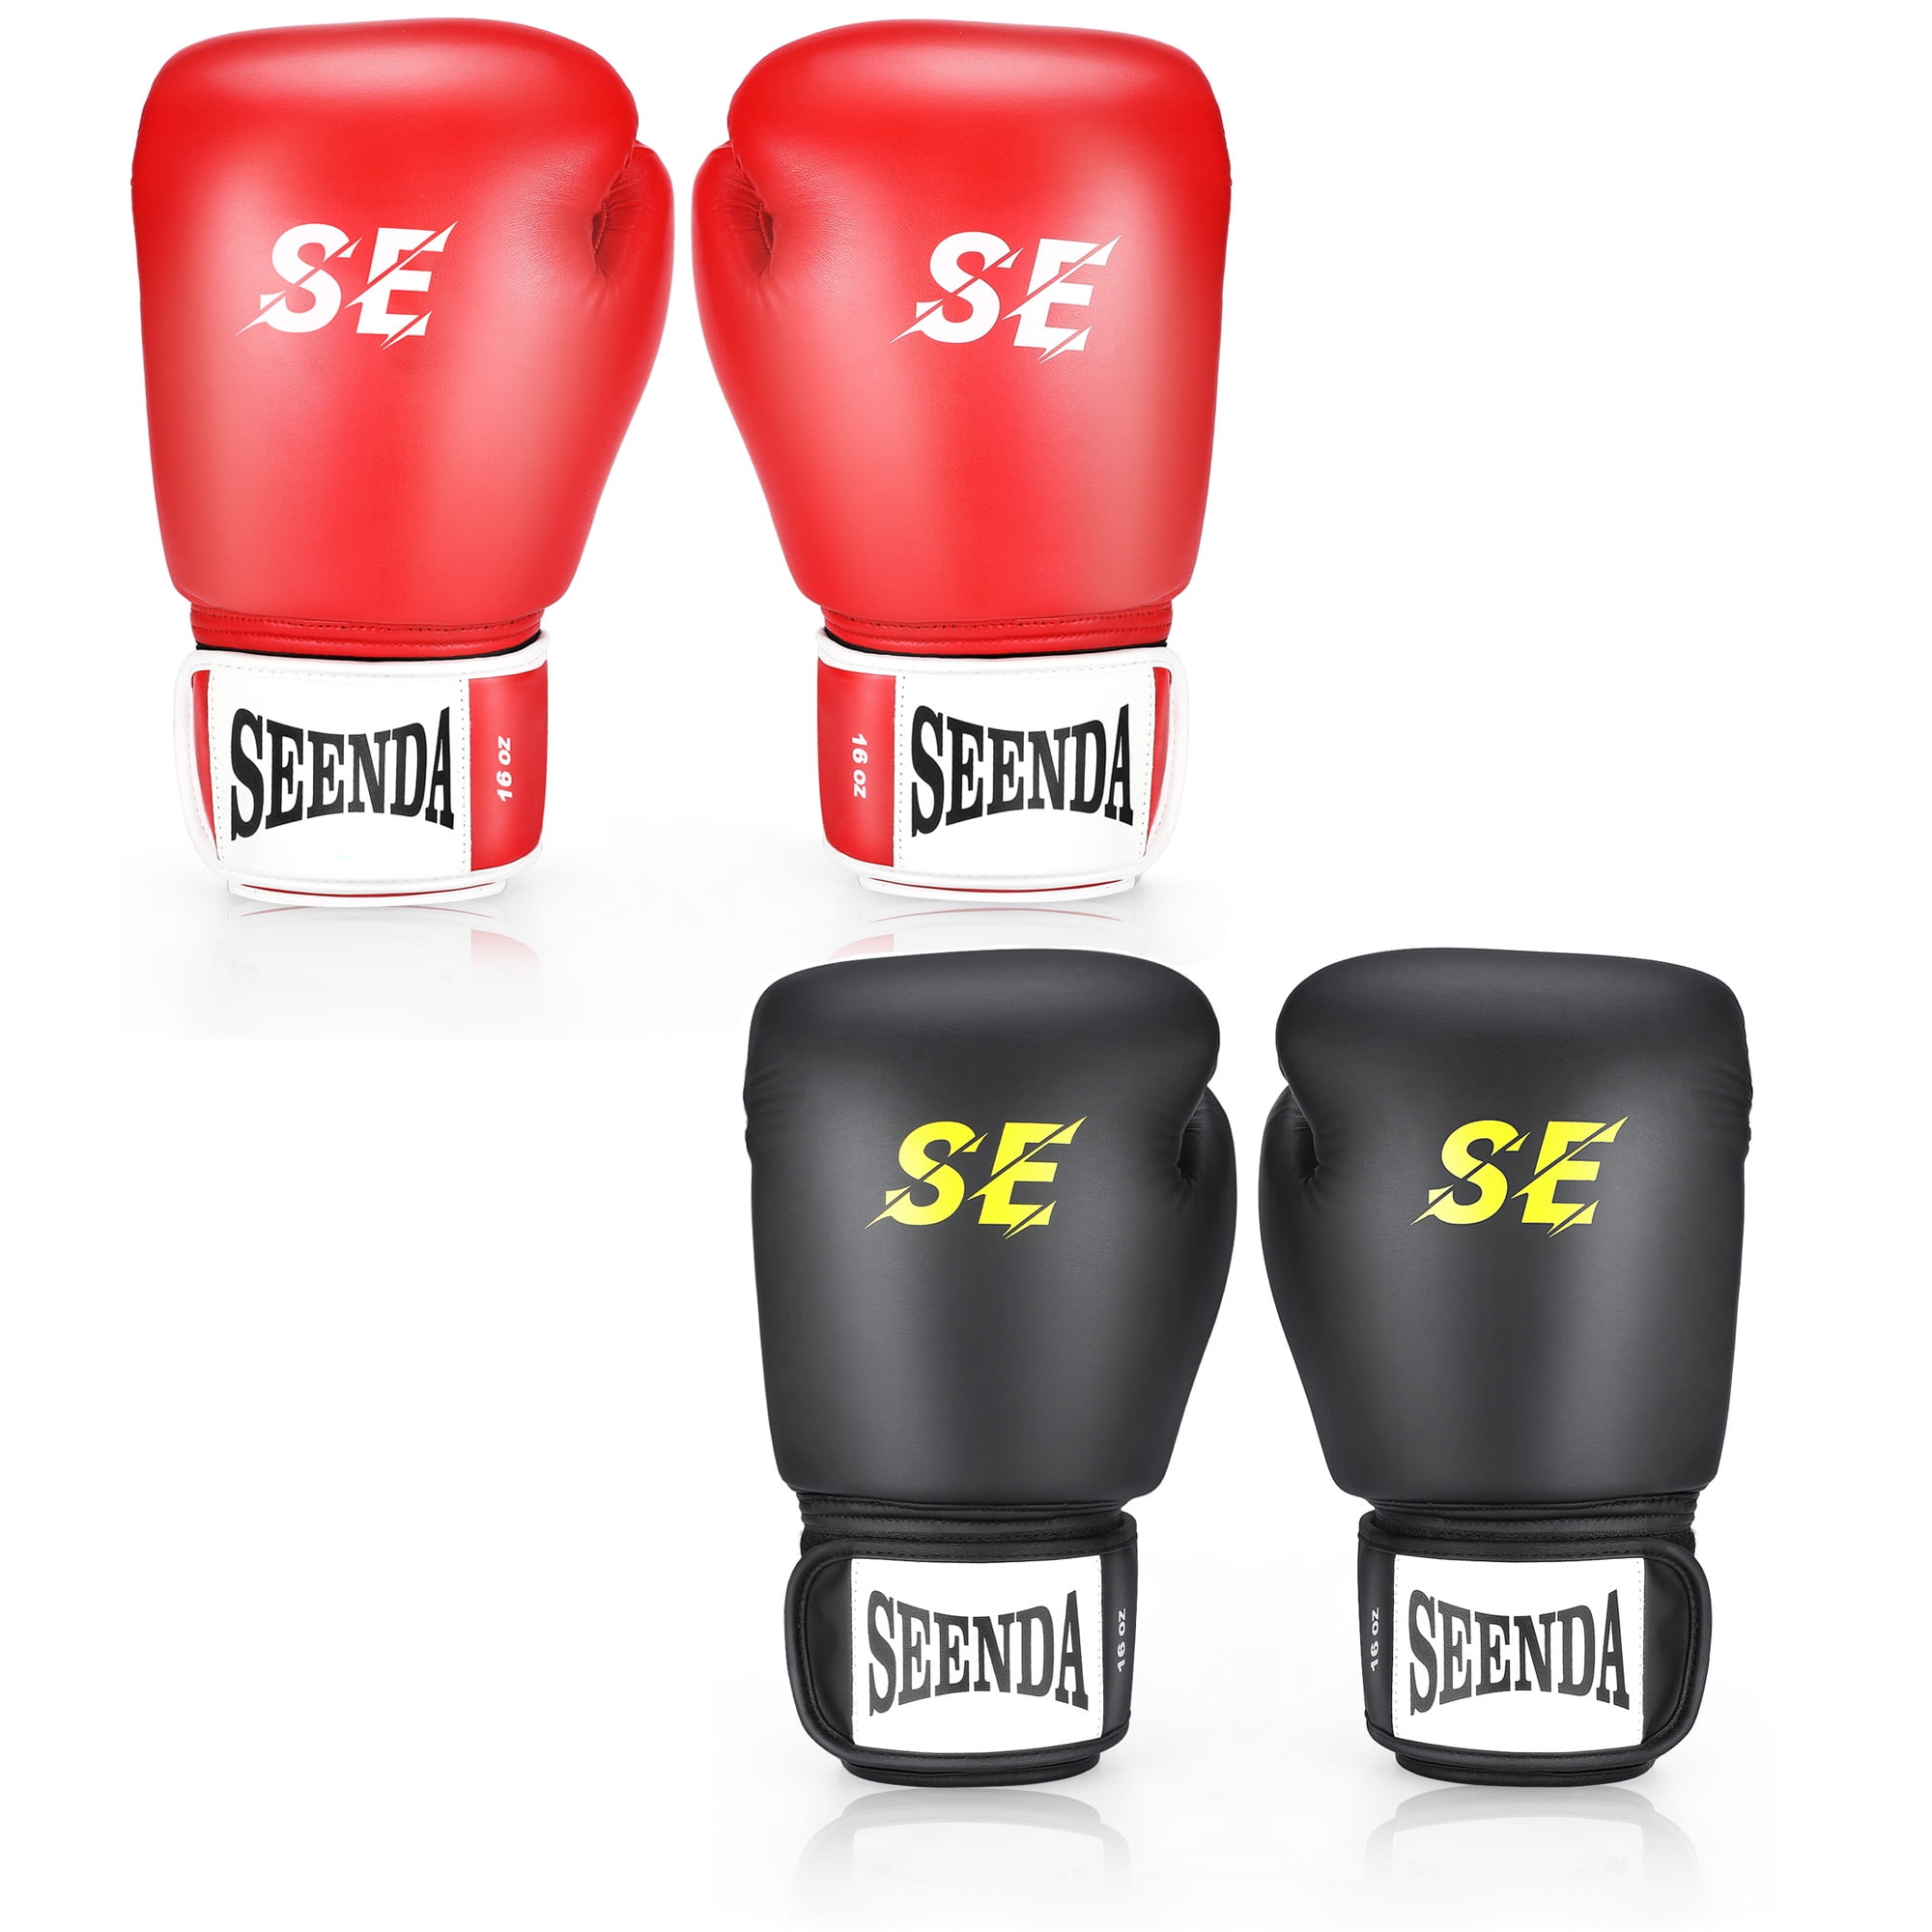 Heavy Bag Gloves for Boxing MMA CKE Boxing Gloves for Men Women Training Boxing Gloves for Punching Bag Kickboxing Muay Thai Sparring Gloves 